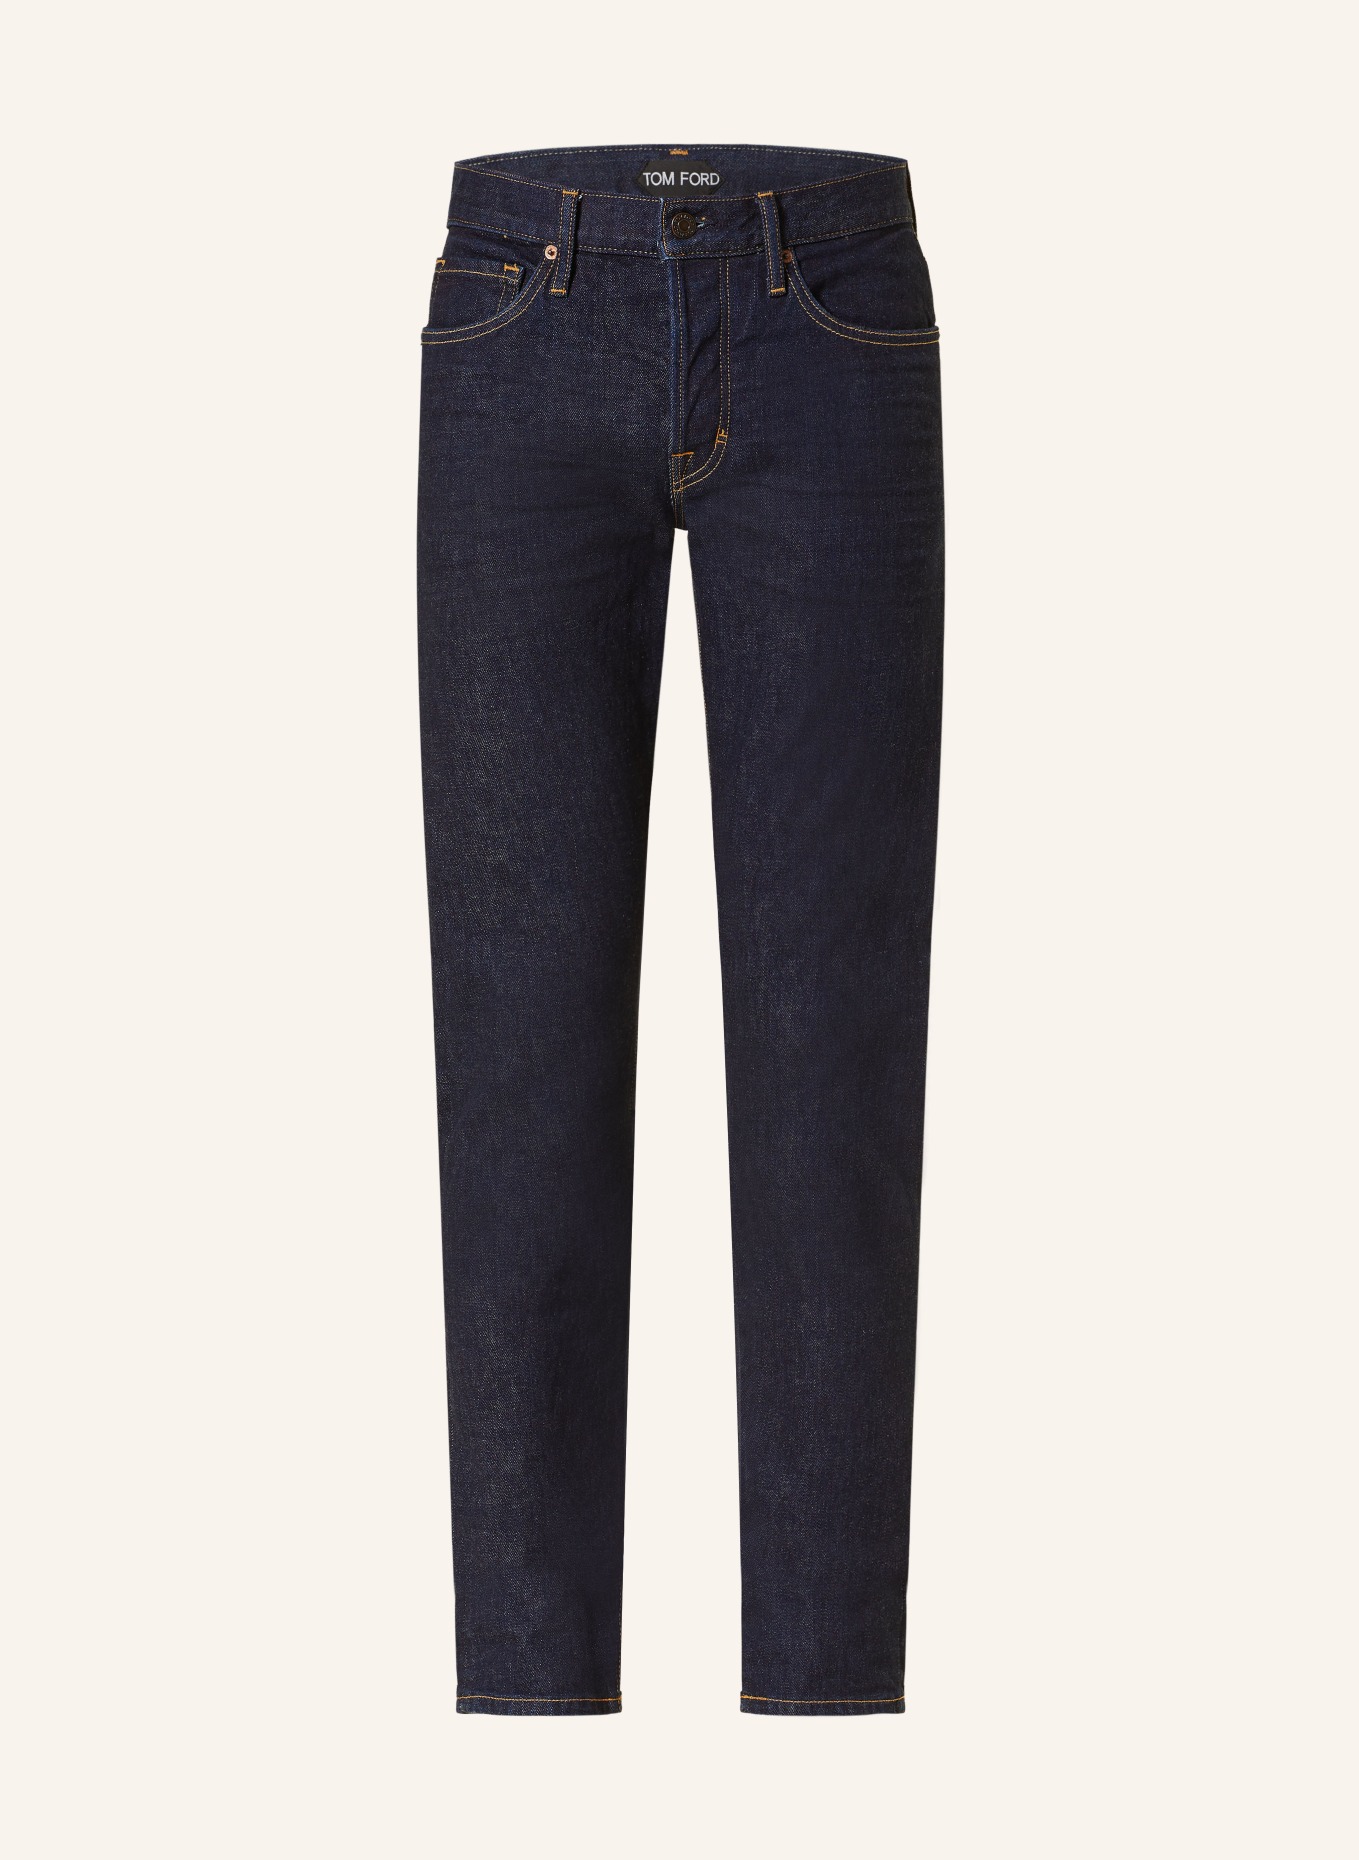 TOM FORD Jeans Slim Fit, Farbe: HB800 BLUE (Bild 1)